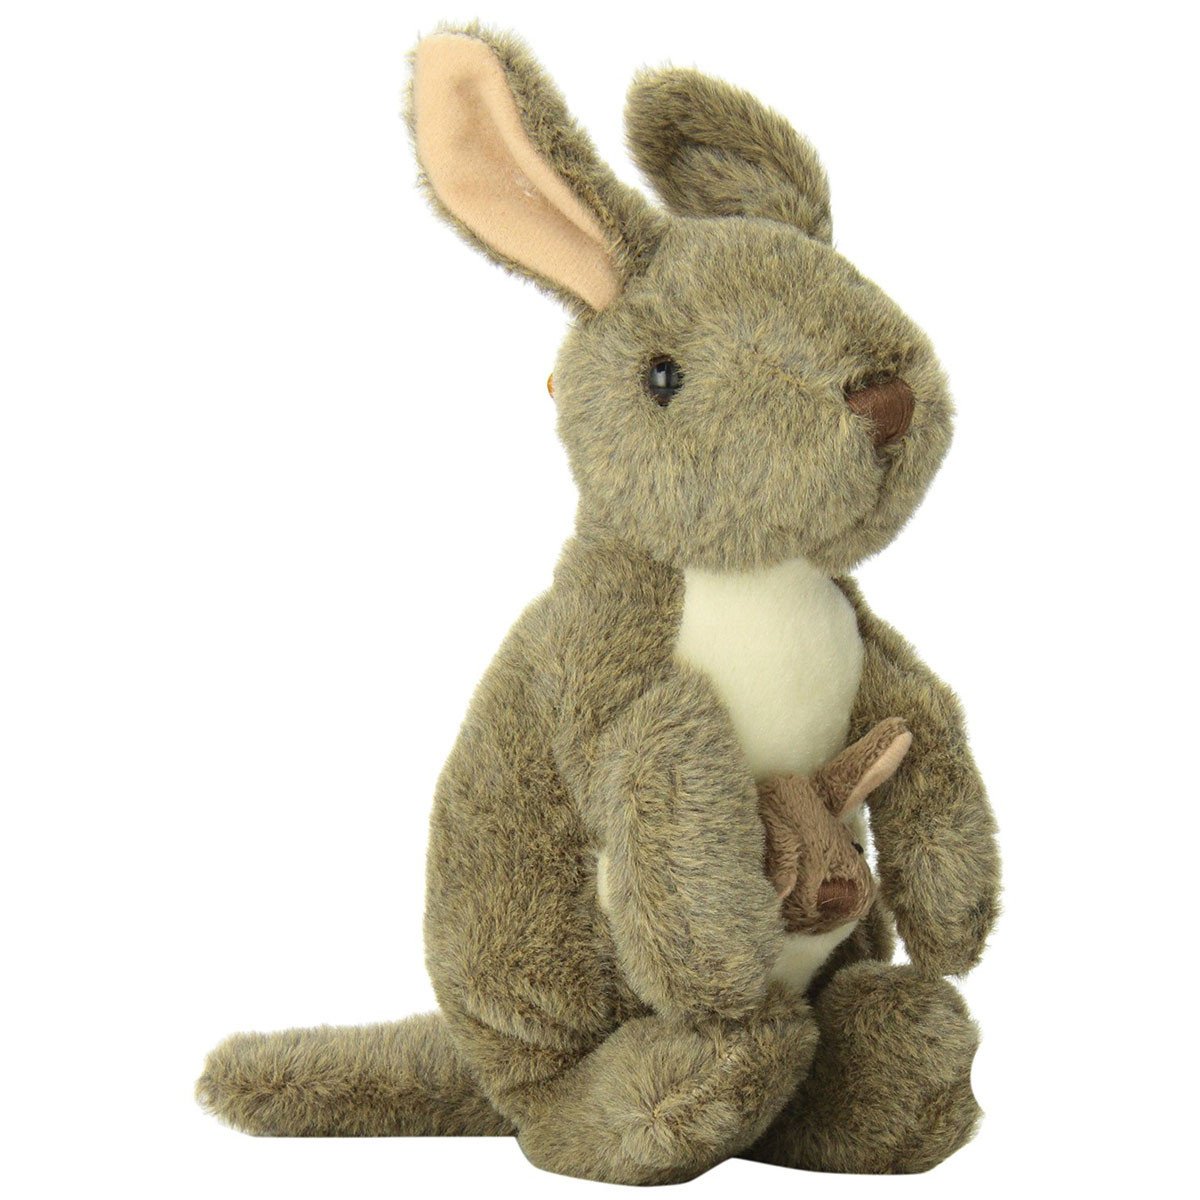 kangaroo stuffed animals